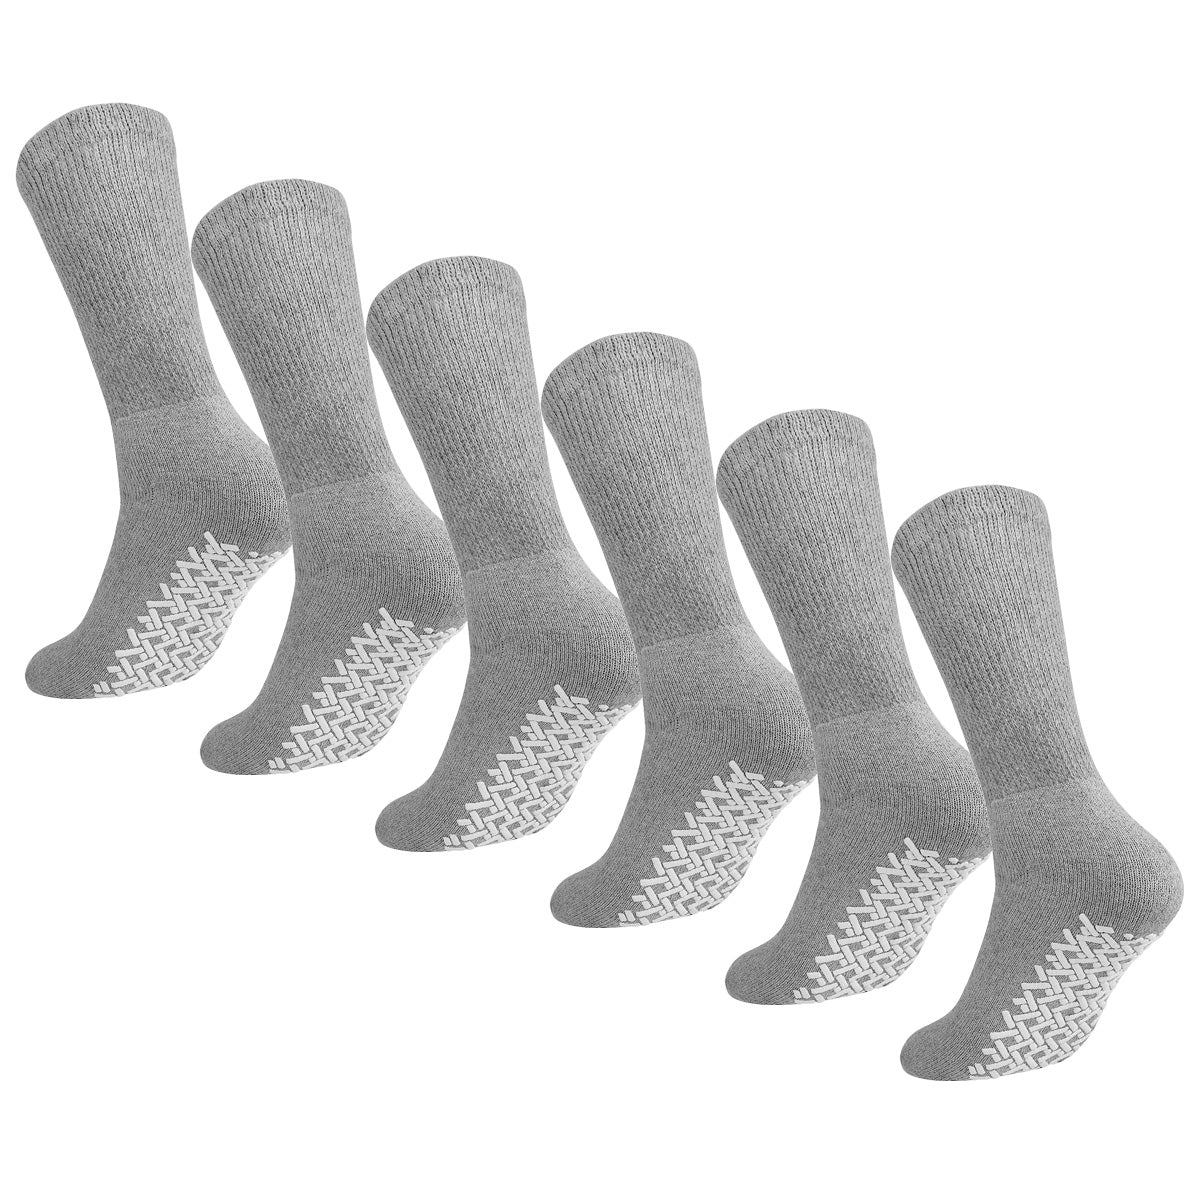 Falari Anti-Slip Cotton Diabetic Socks